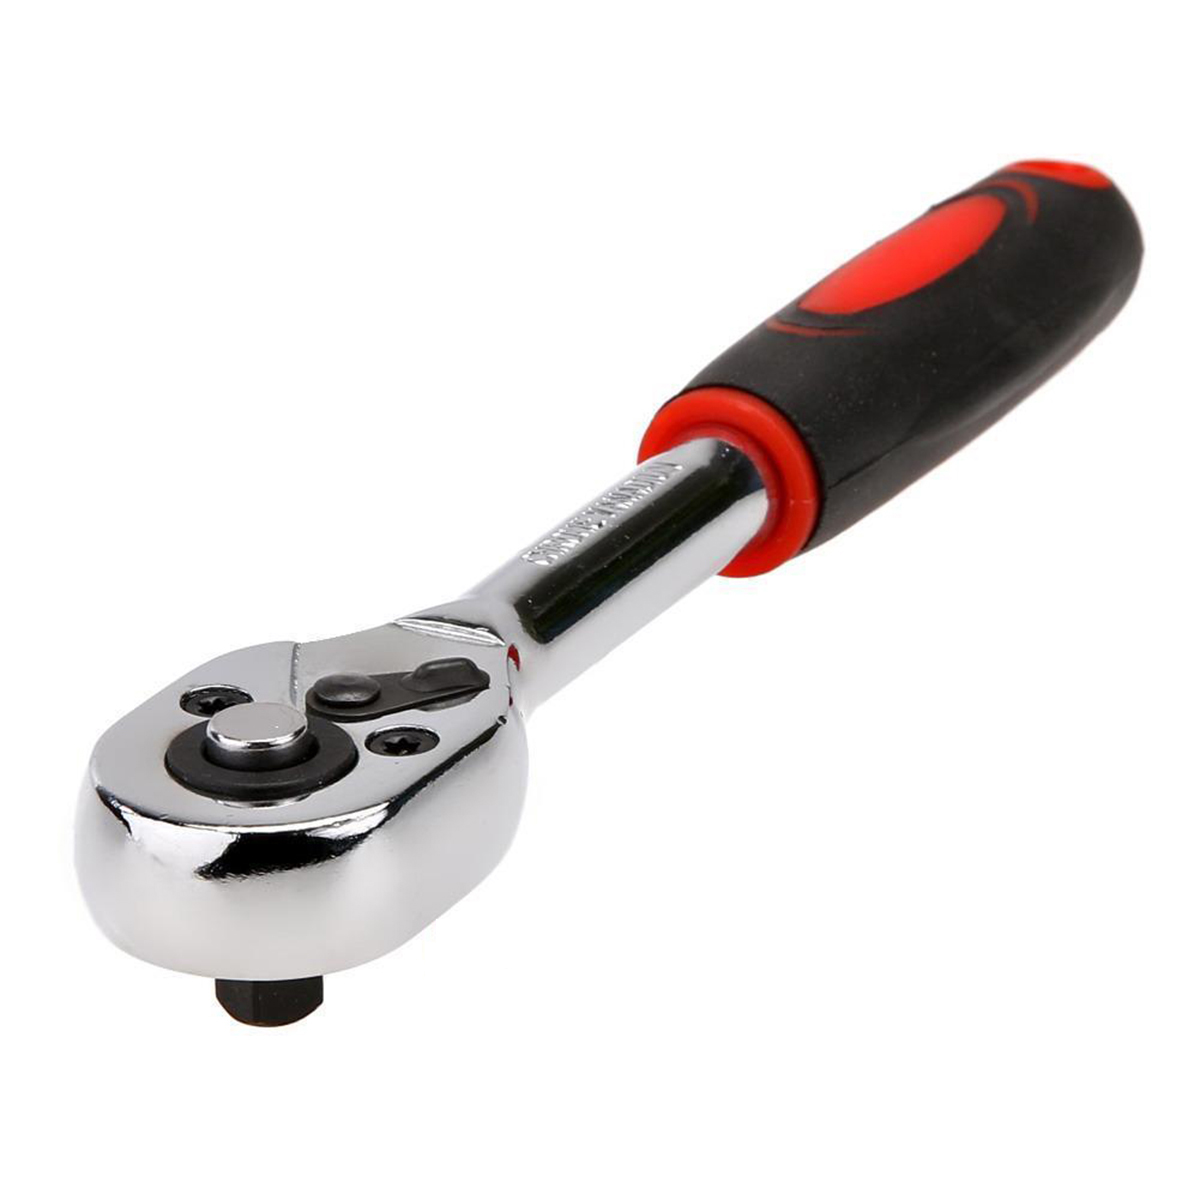 38-Handle-Drive-Socket-Ratchet-Spanner-Wrench-Quick-Release-24-Teeth-Repair-Tool-1387512-6